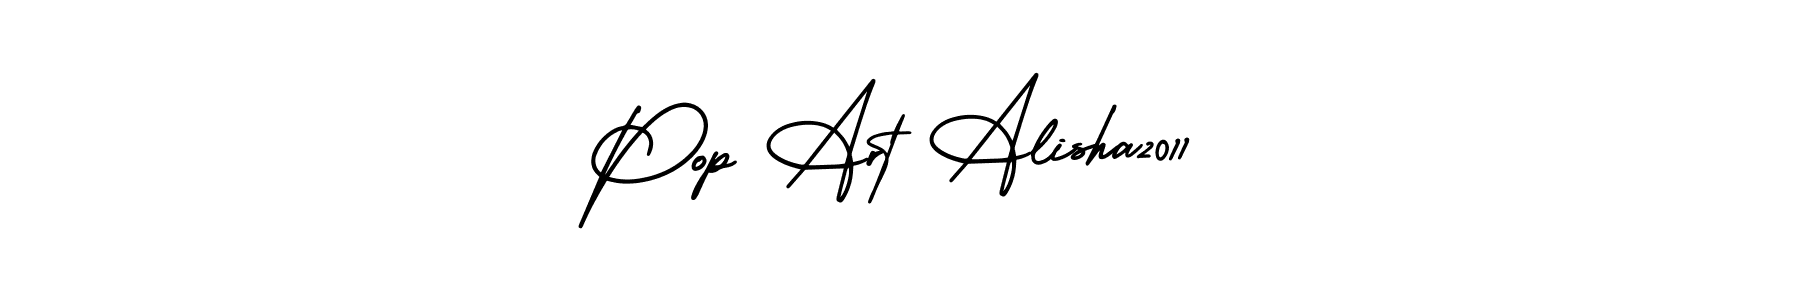 How to Draw Pop Art Alisha2011 signature style? AmerikaSignatureDemo-Regular is a latest design signature styles for name Pop Art Alisha2011. Pop Art Alisha2011 signature style 3 images and pictures png